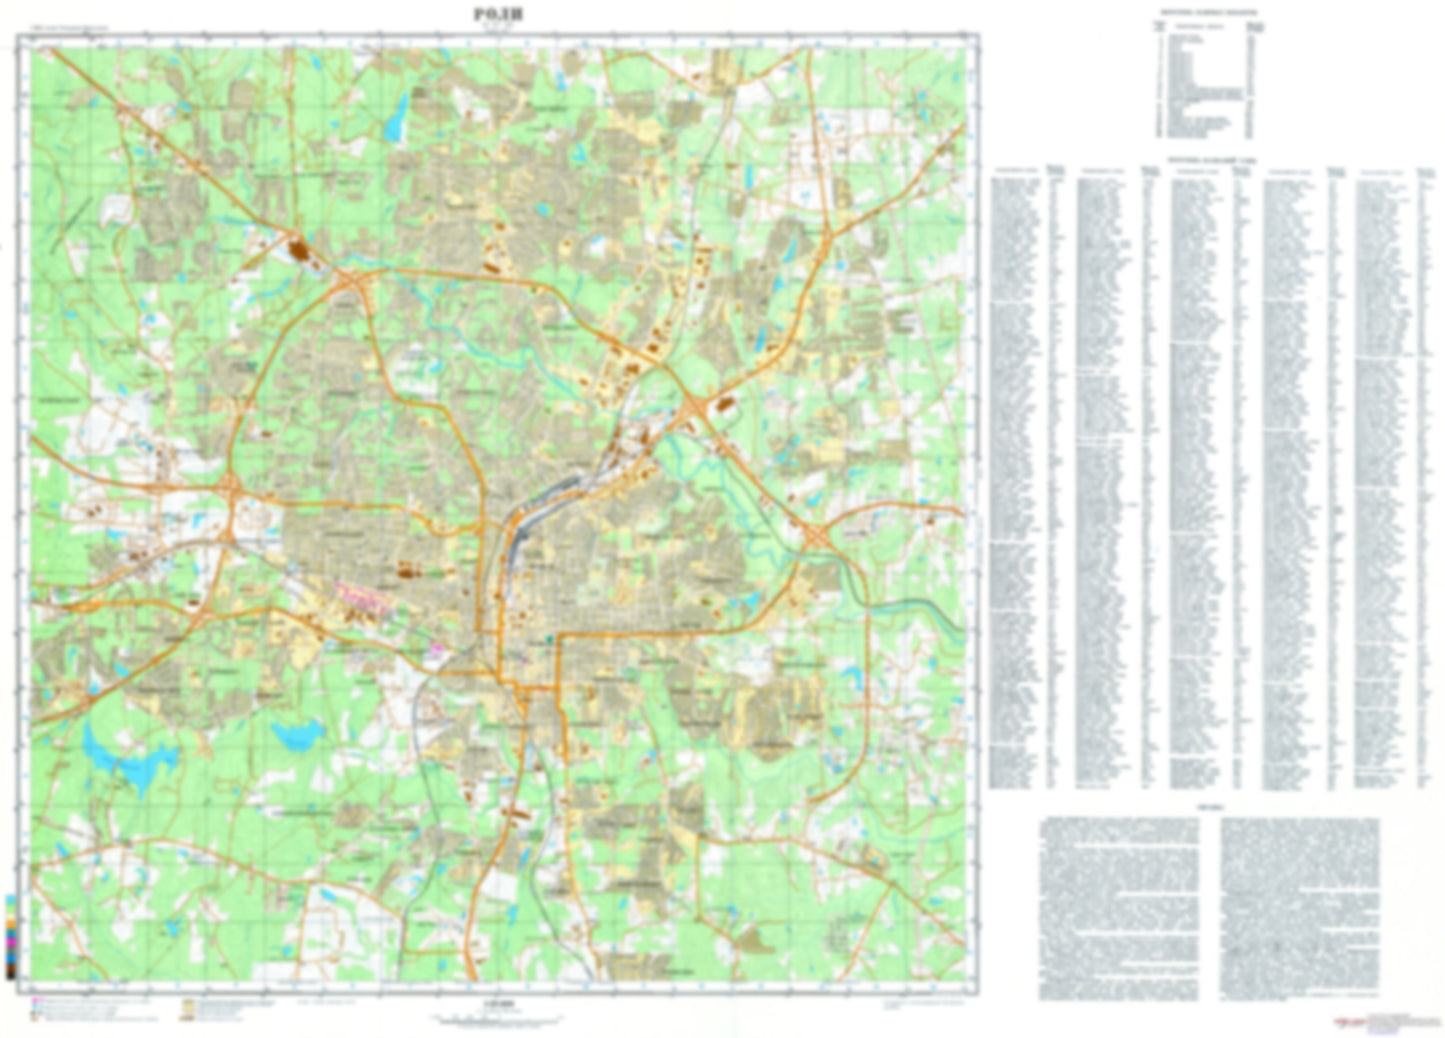 Raleigh, NC (USA) - Soviet Military City Plans